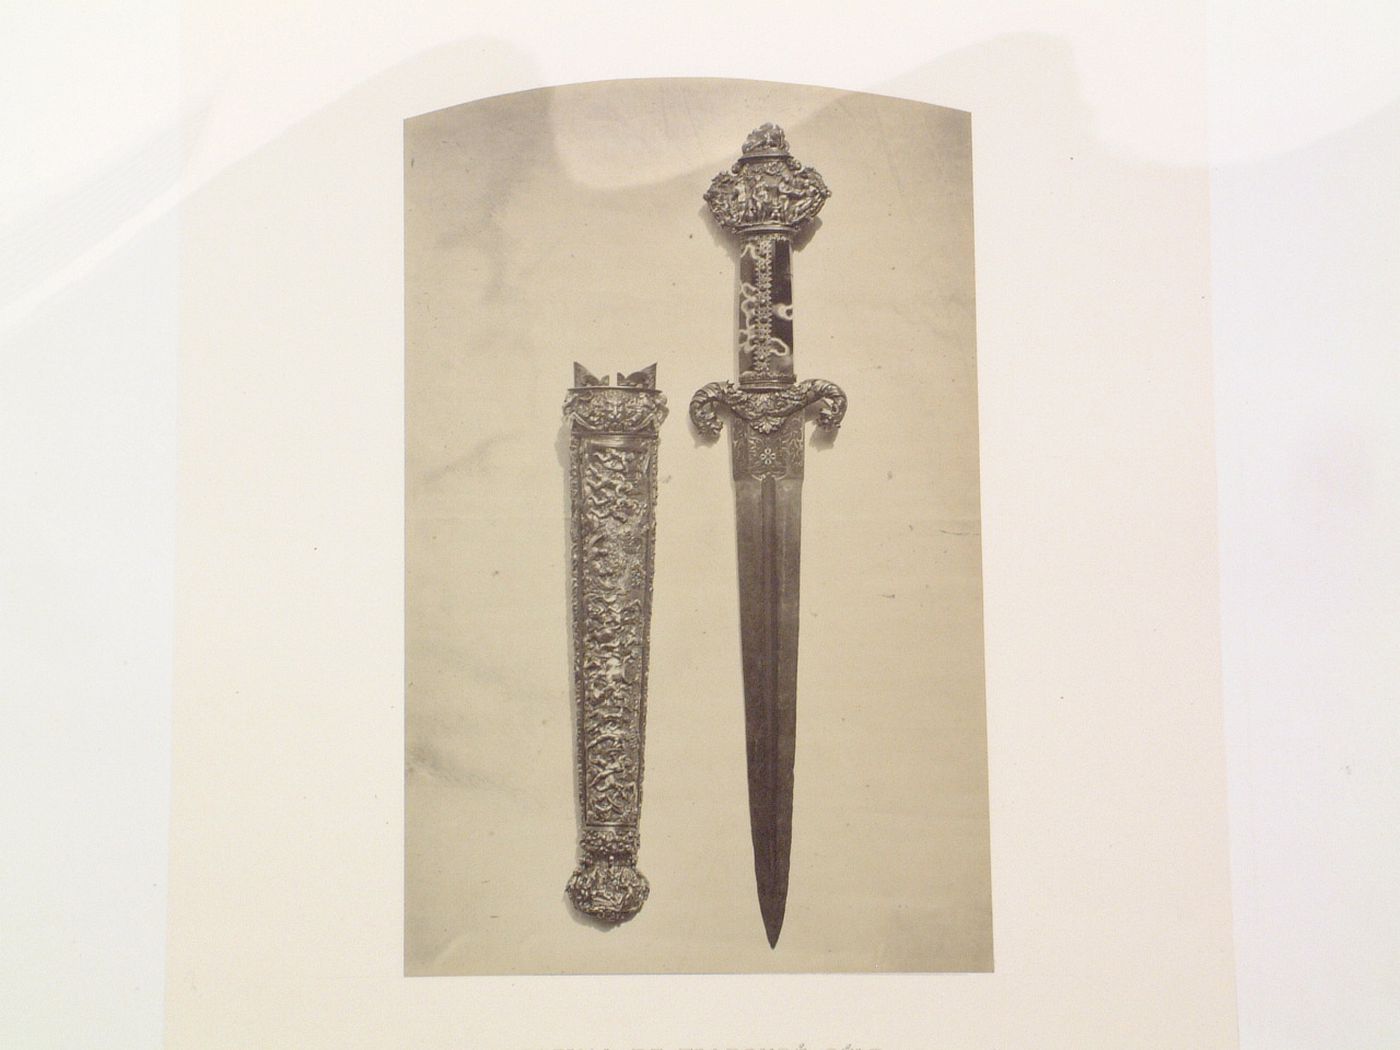 Photograph of a Florentine dagger, Armoury, Tsarskoye Selo (now Pushkin), Russia